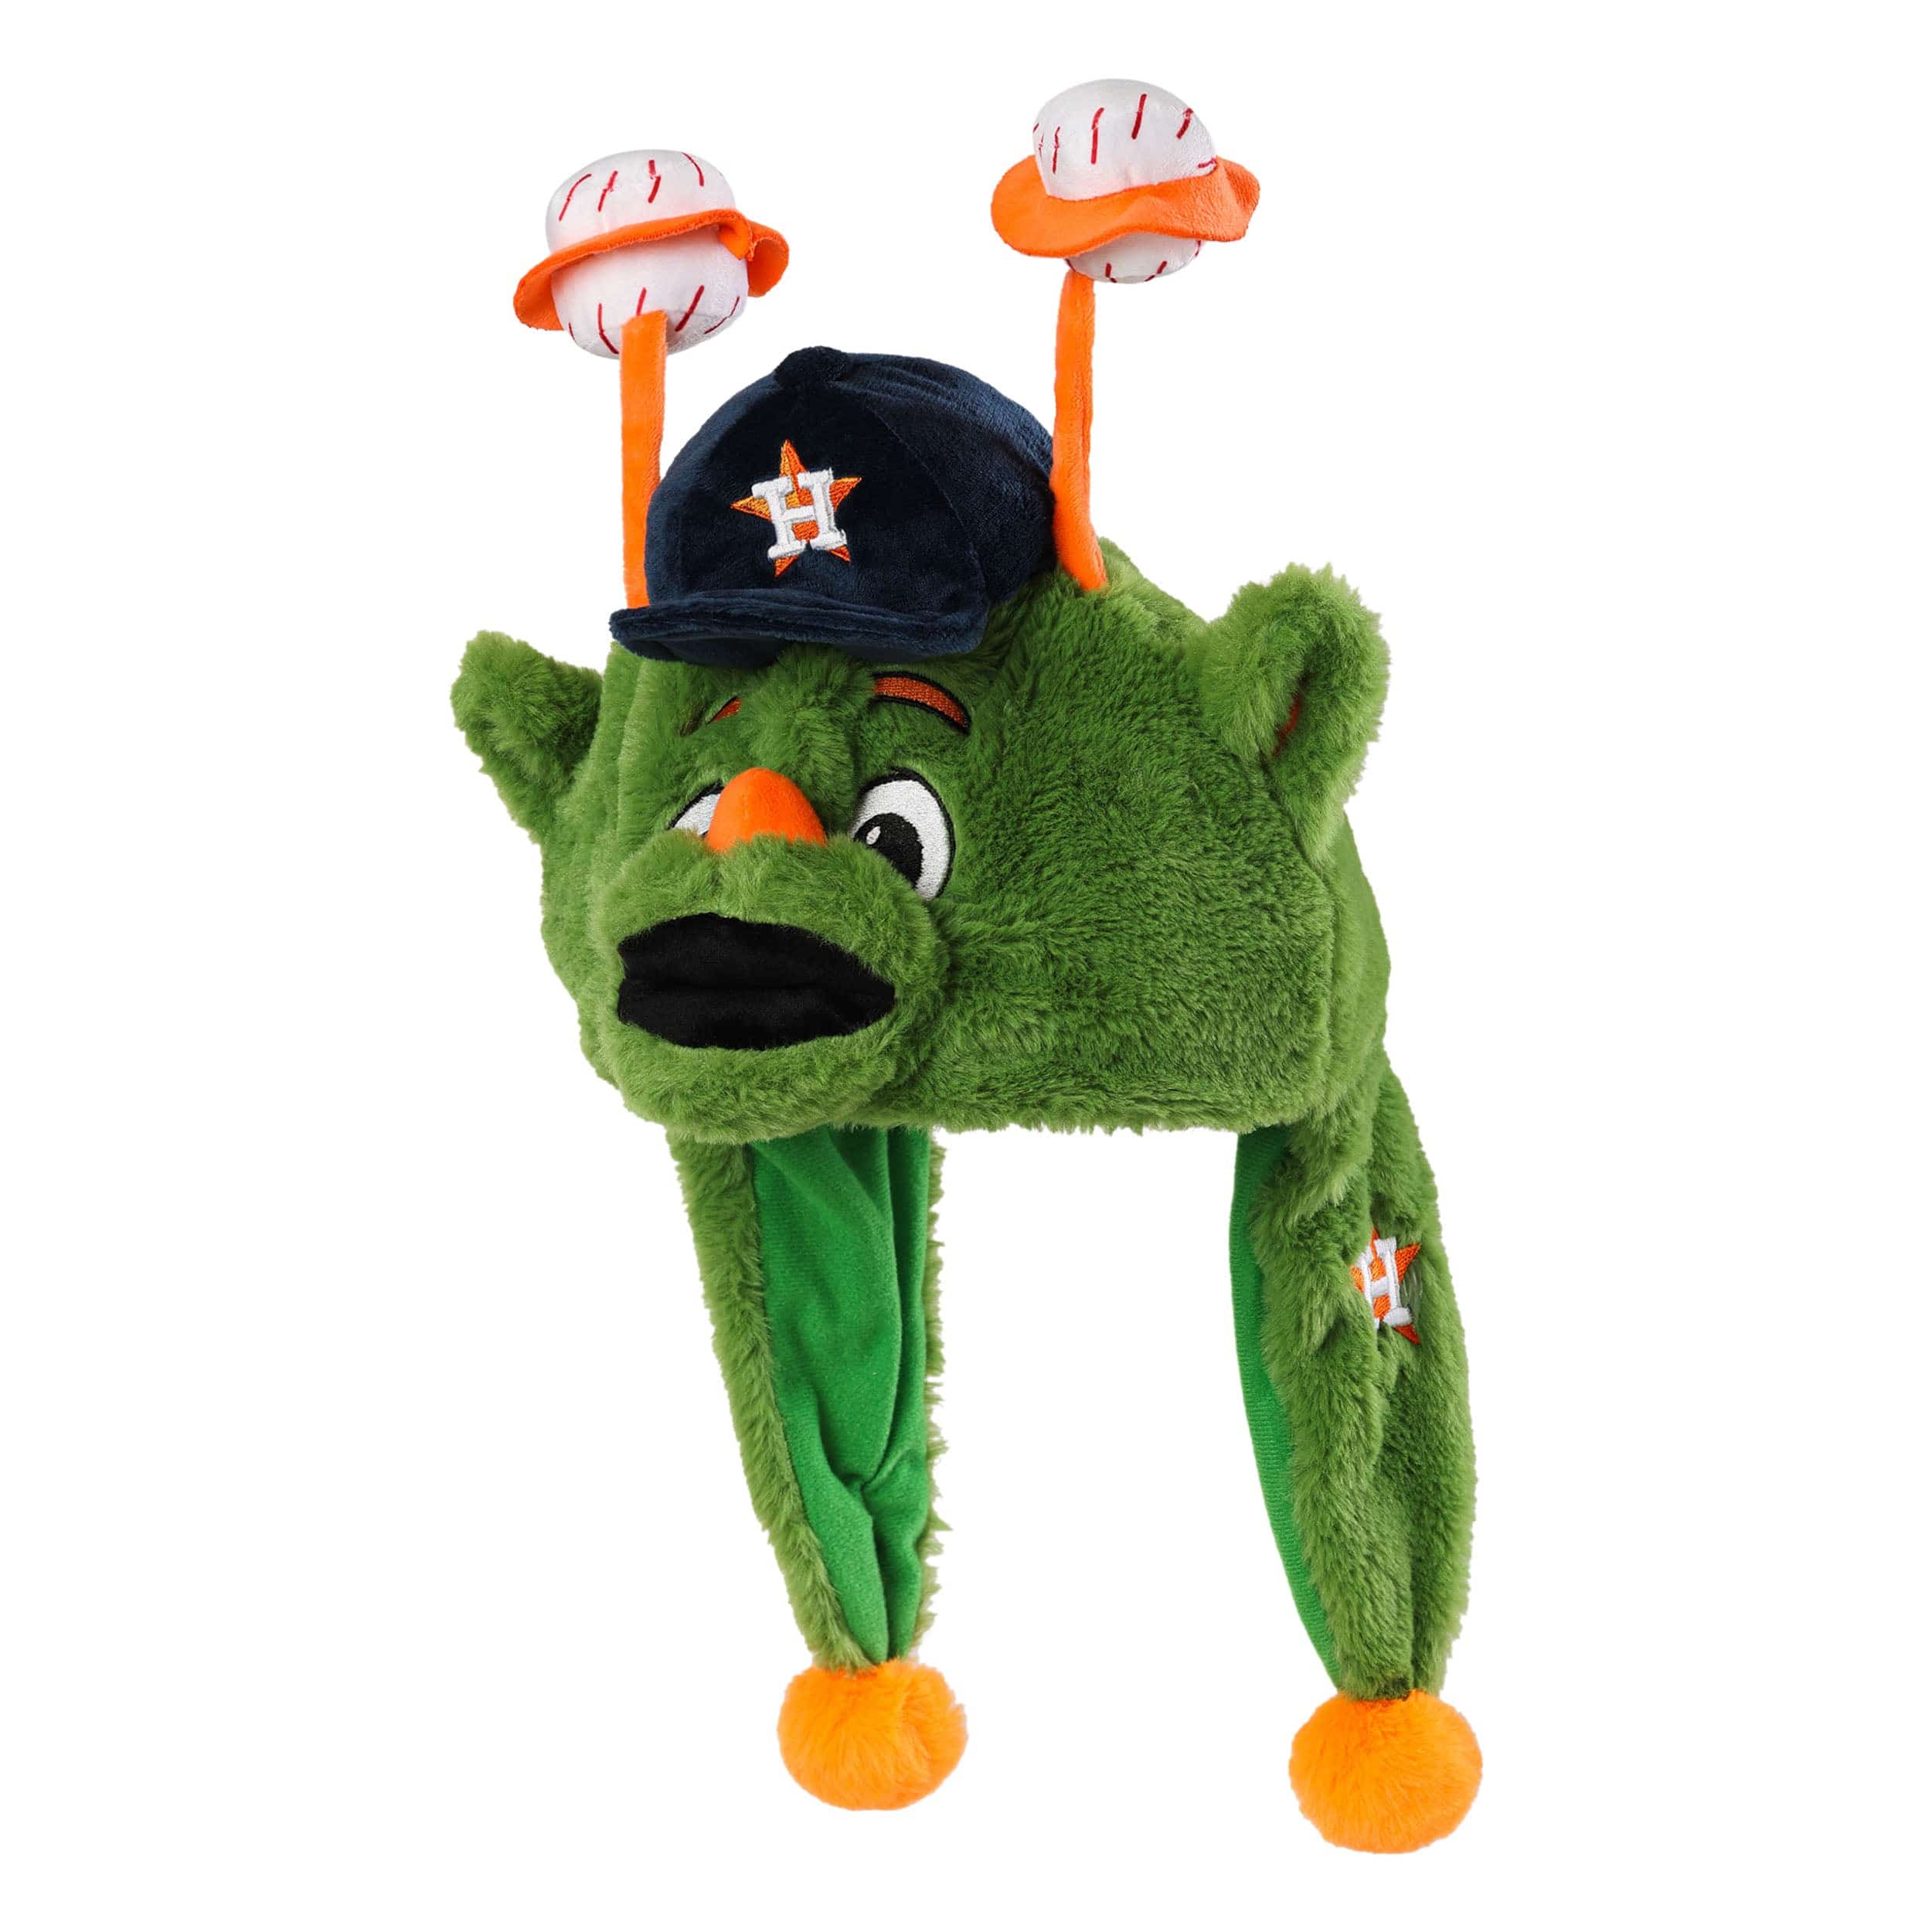 Buy MLB Houston Astros Orbit Mascot Plush Figure, 8, Navy Online at Low  Prices in India 